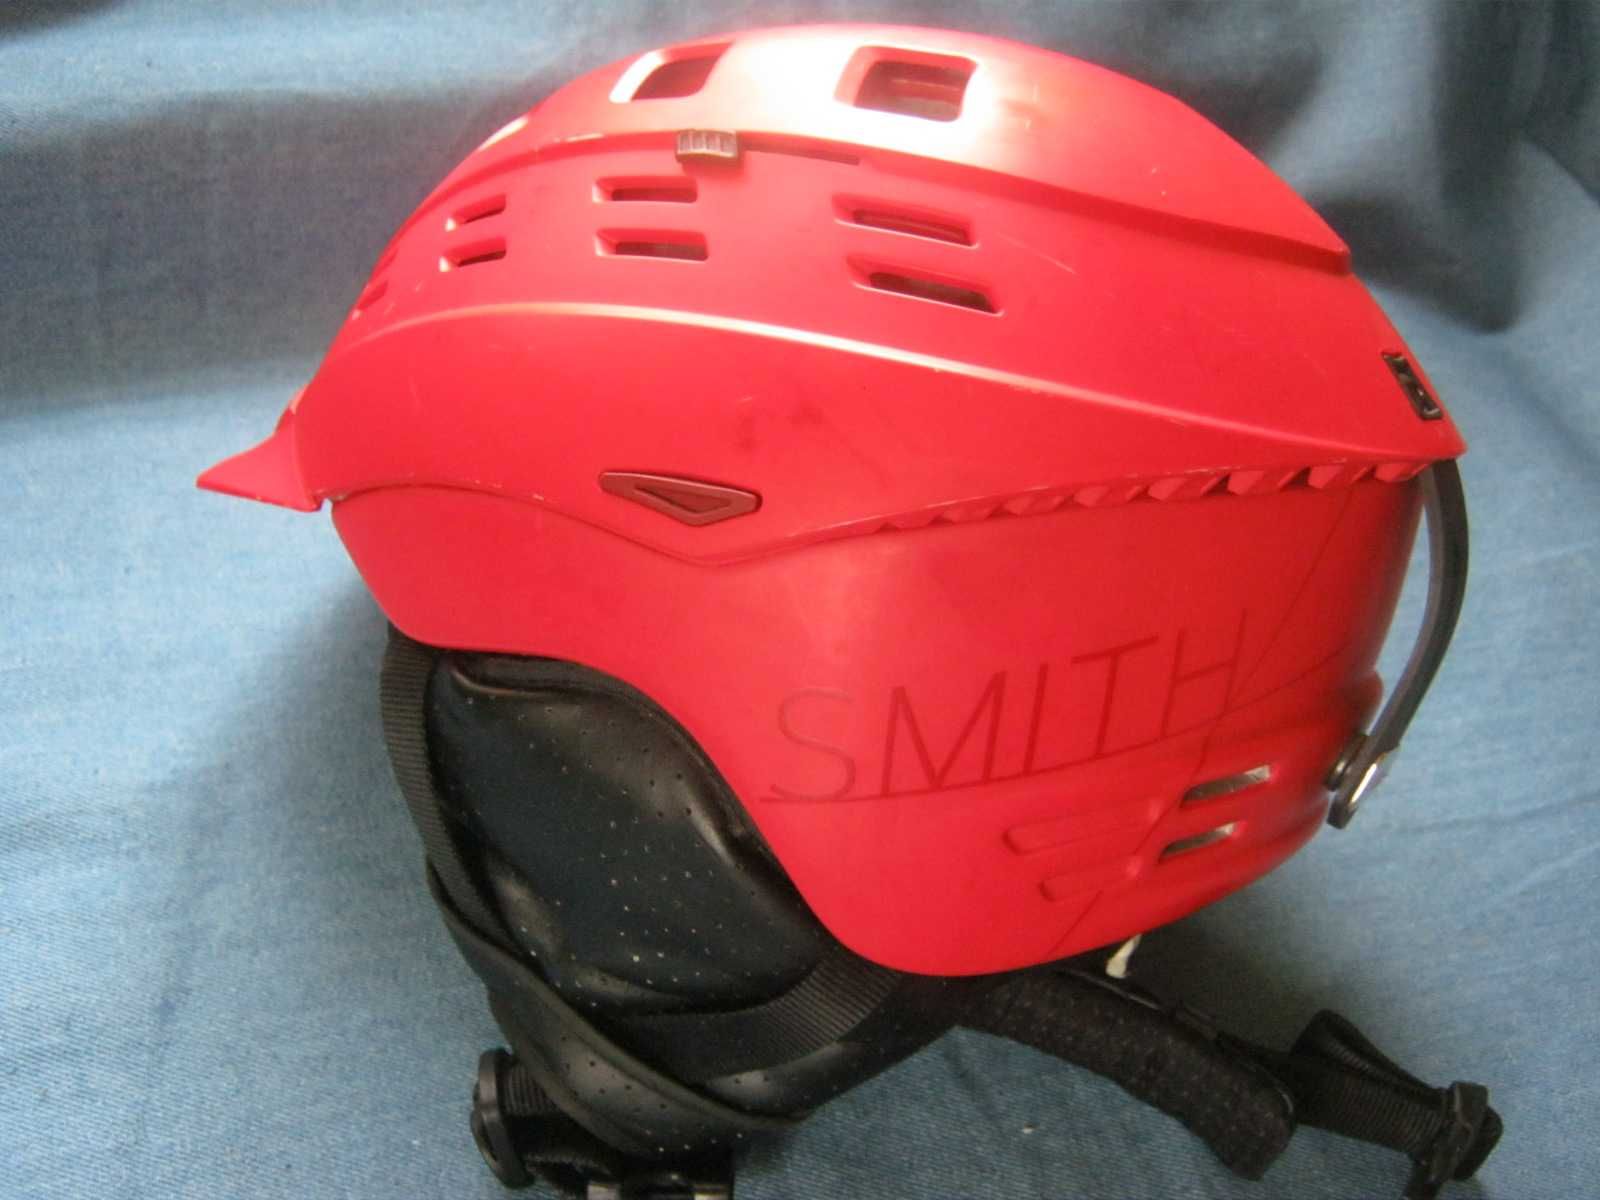 Горнолыжный вело шлем Smith Variant